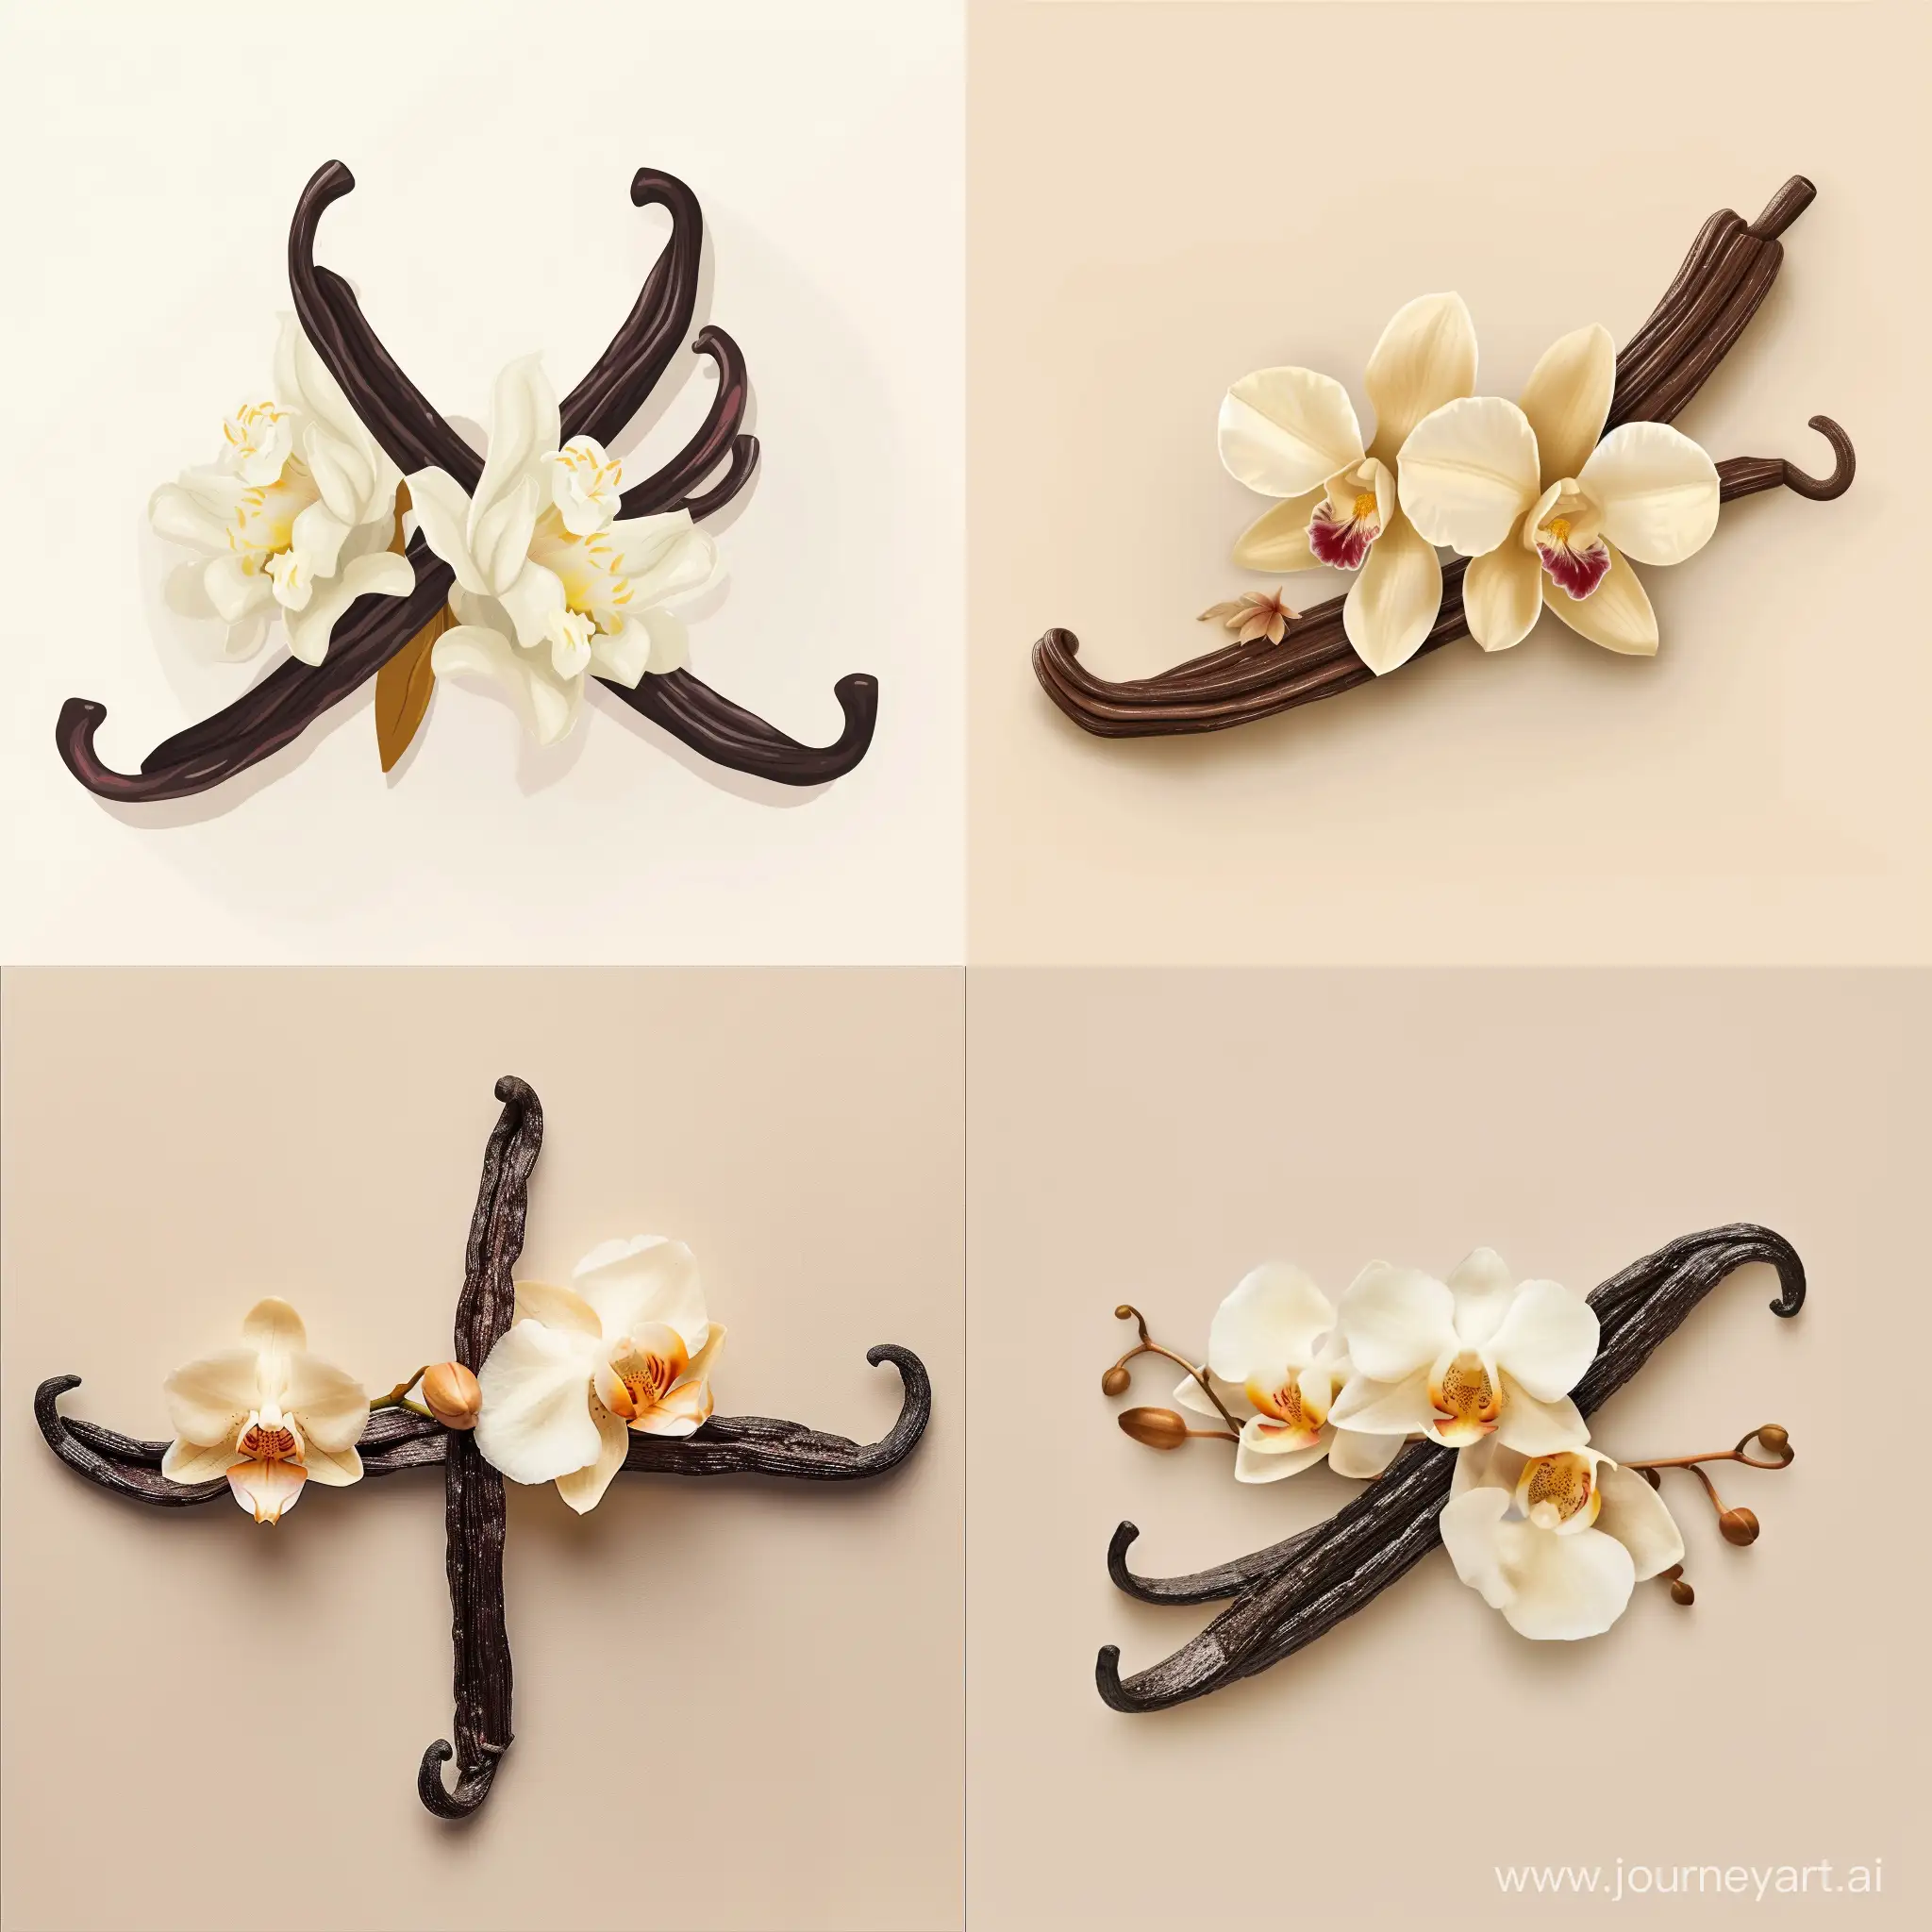 Vanilla-Bean-and-Flower-Arrangement-in-Flat-Style